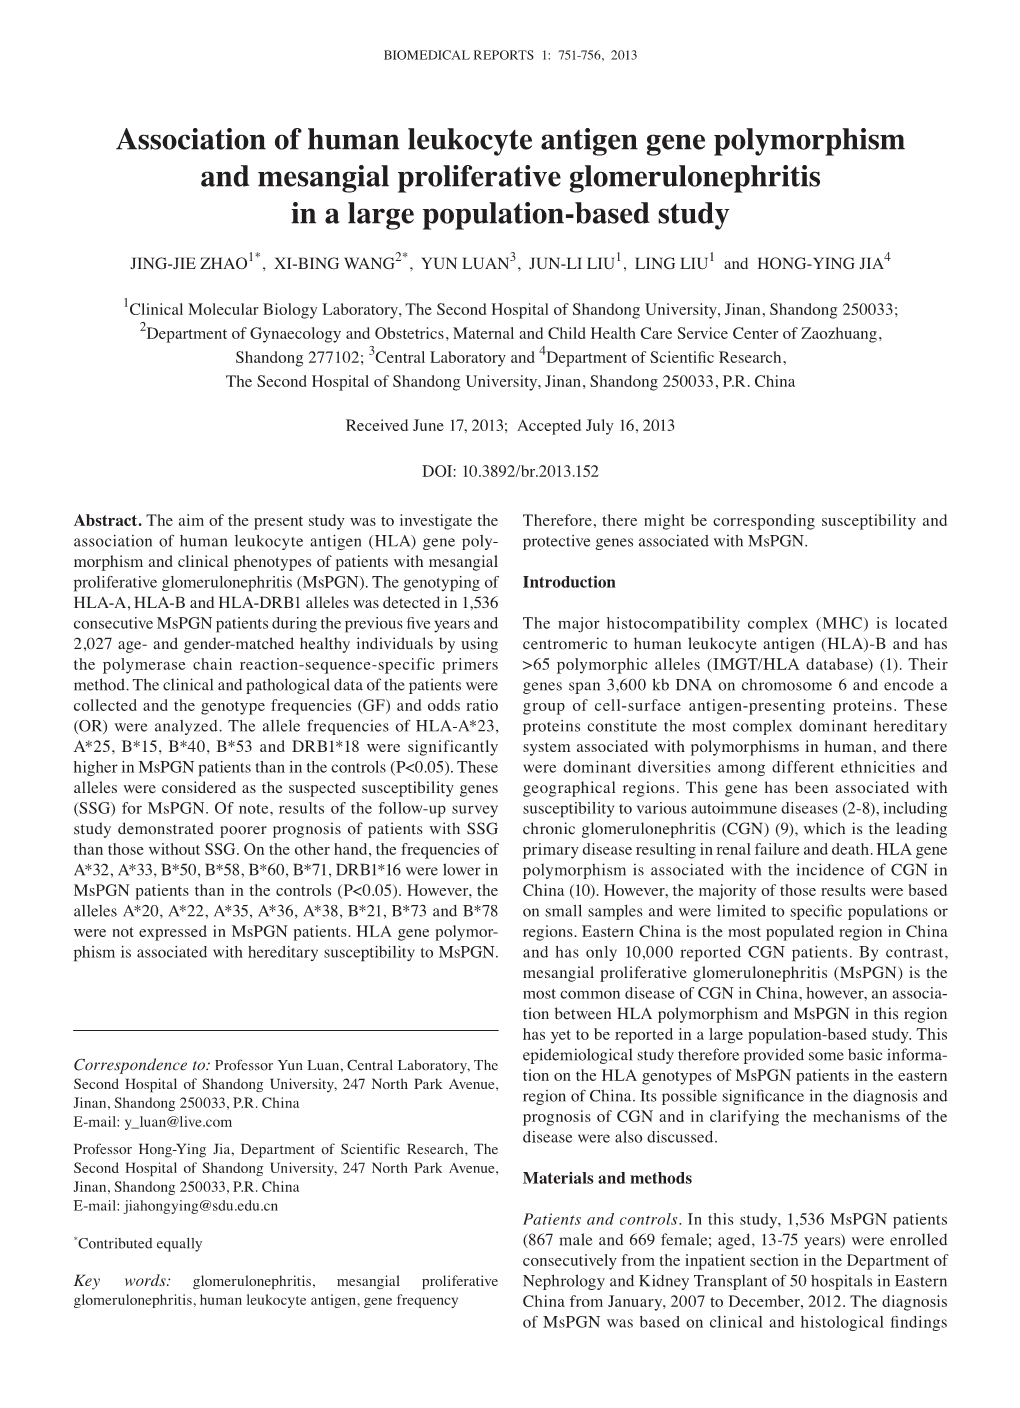 Association of Human Leukocyte Antigen Gene Polymorphism and Mesangial Proliferative Glomerulonephritis in a Large Population‑Based Study